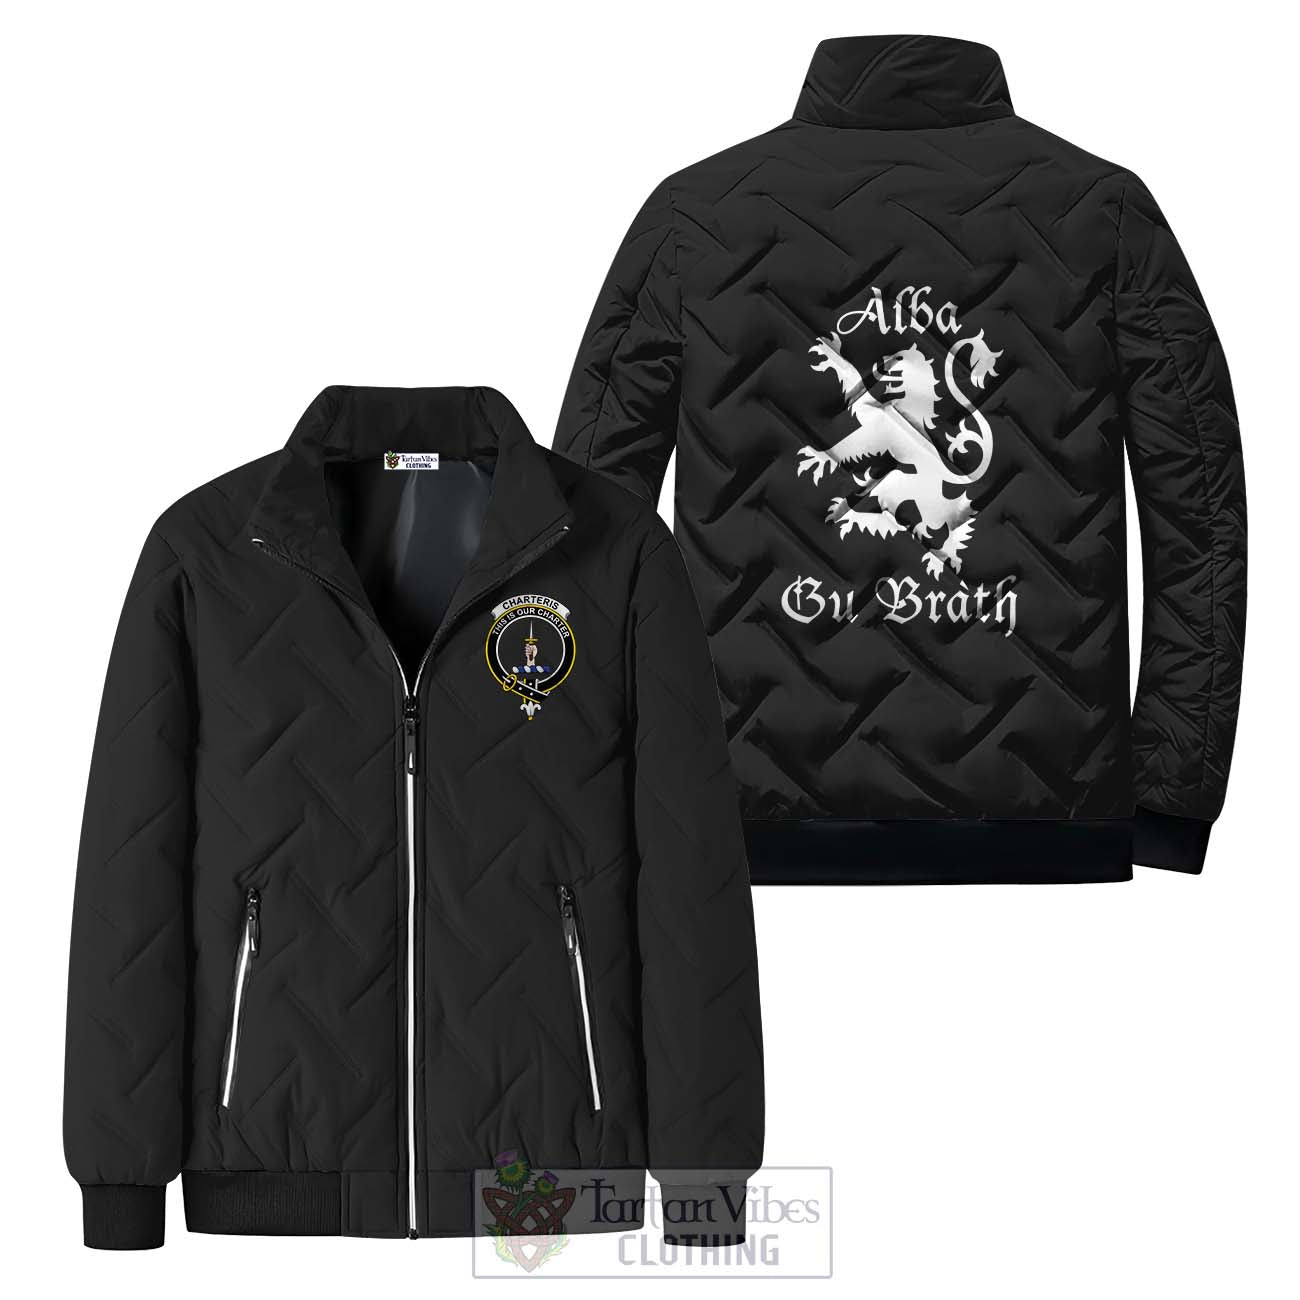 Tartan Vibes Clothing Charteris Family Crest Padded Cotton Jacket Lion Rampant Alba Gu Brath Style